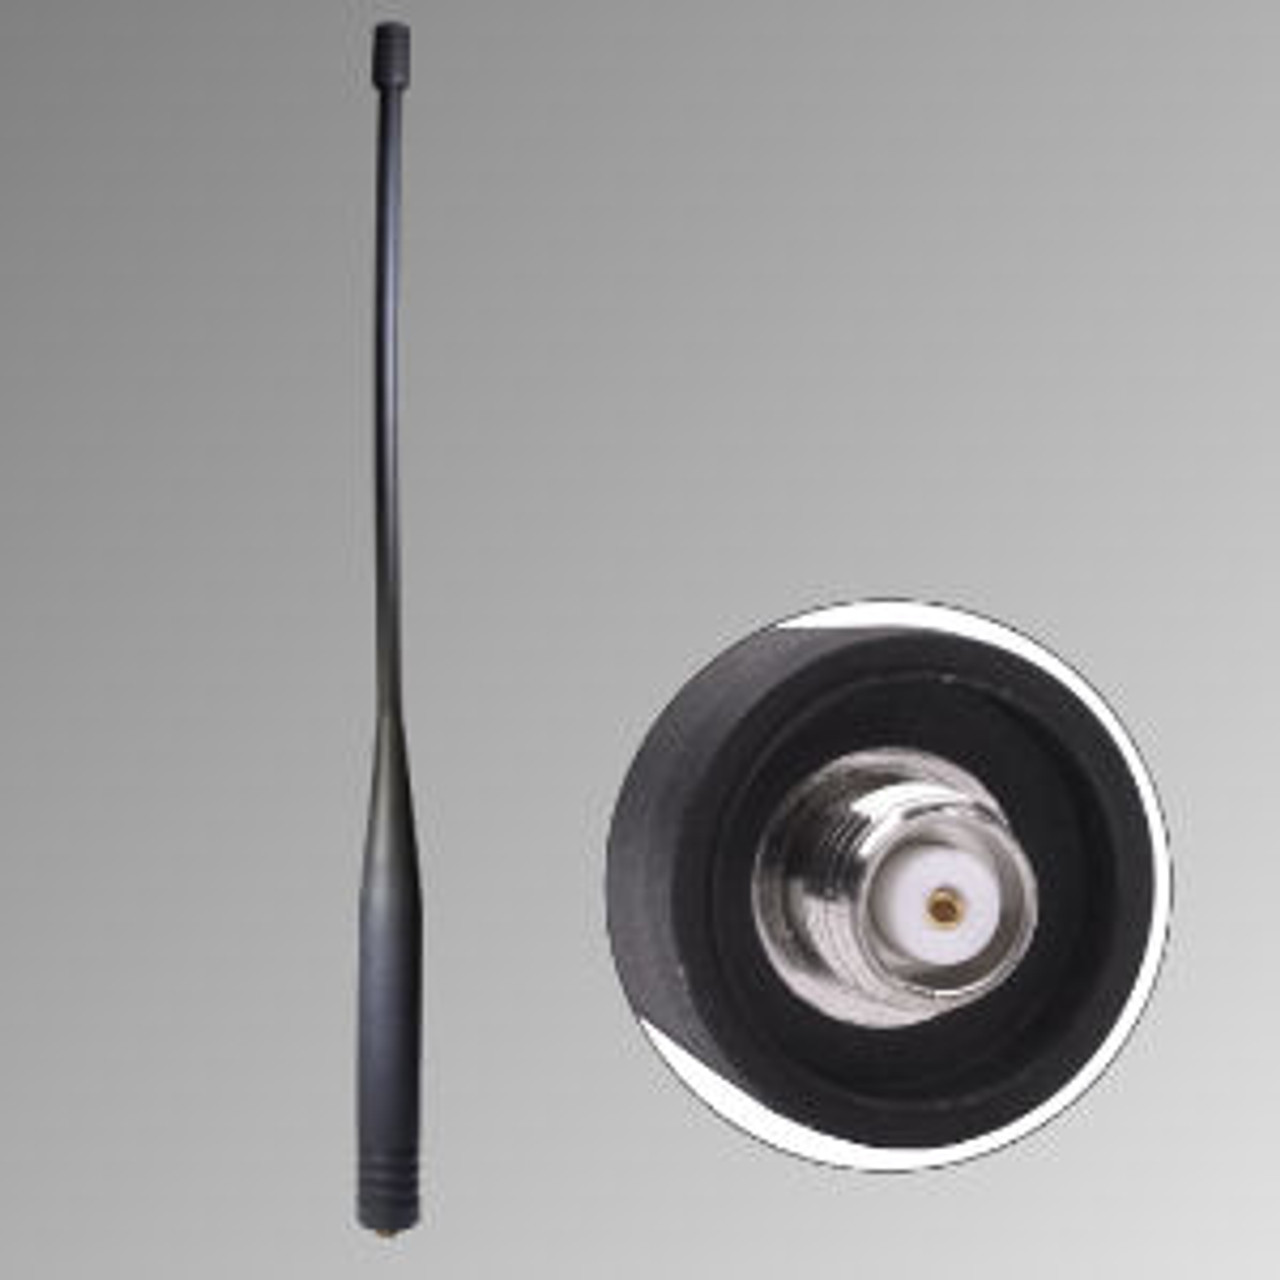 Motorola APX900 Extended Range Antenna - 11", VHF, 150-174 MHz